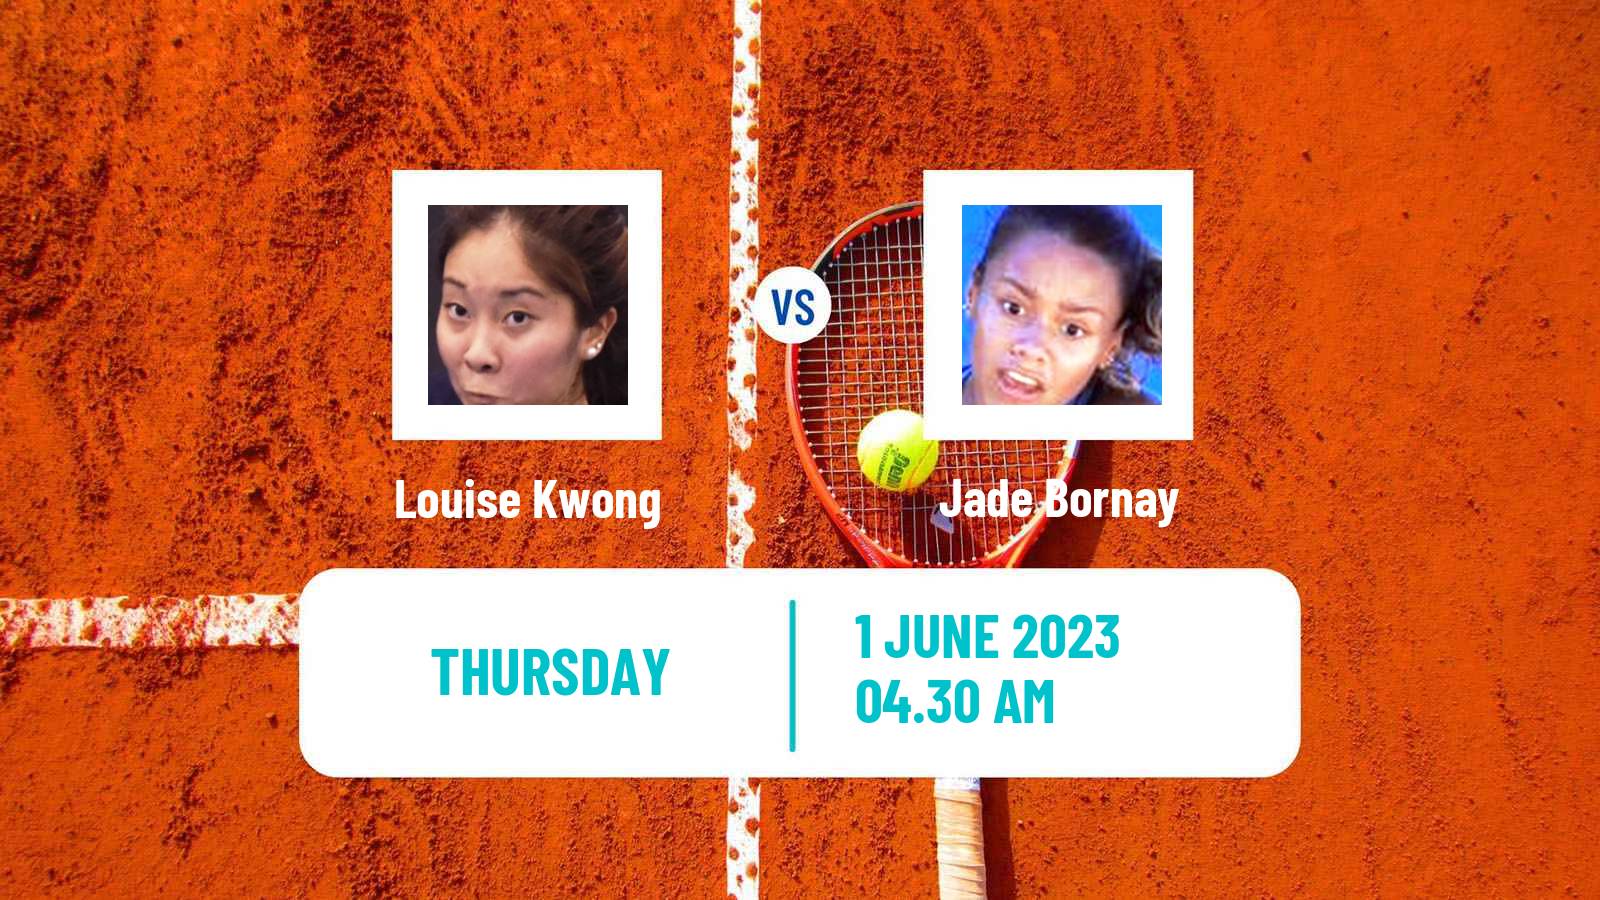 Tennis ITF W15 Monastir 17 Women Louise Kwong - Jade Bornay